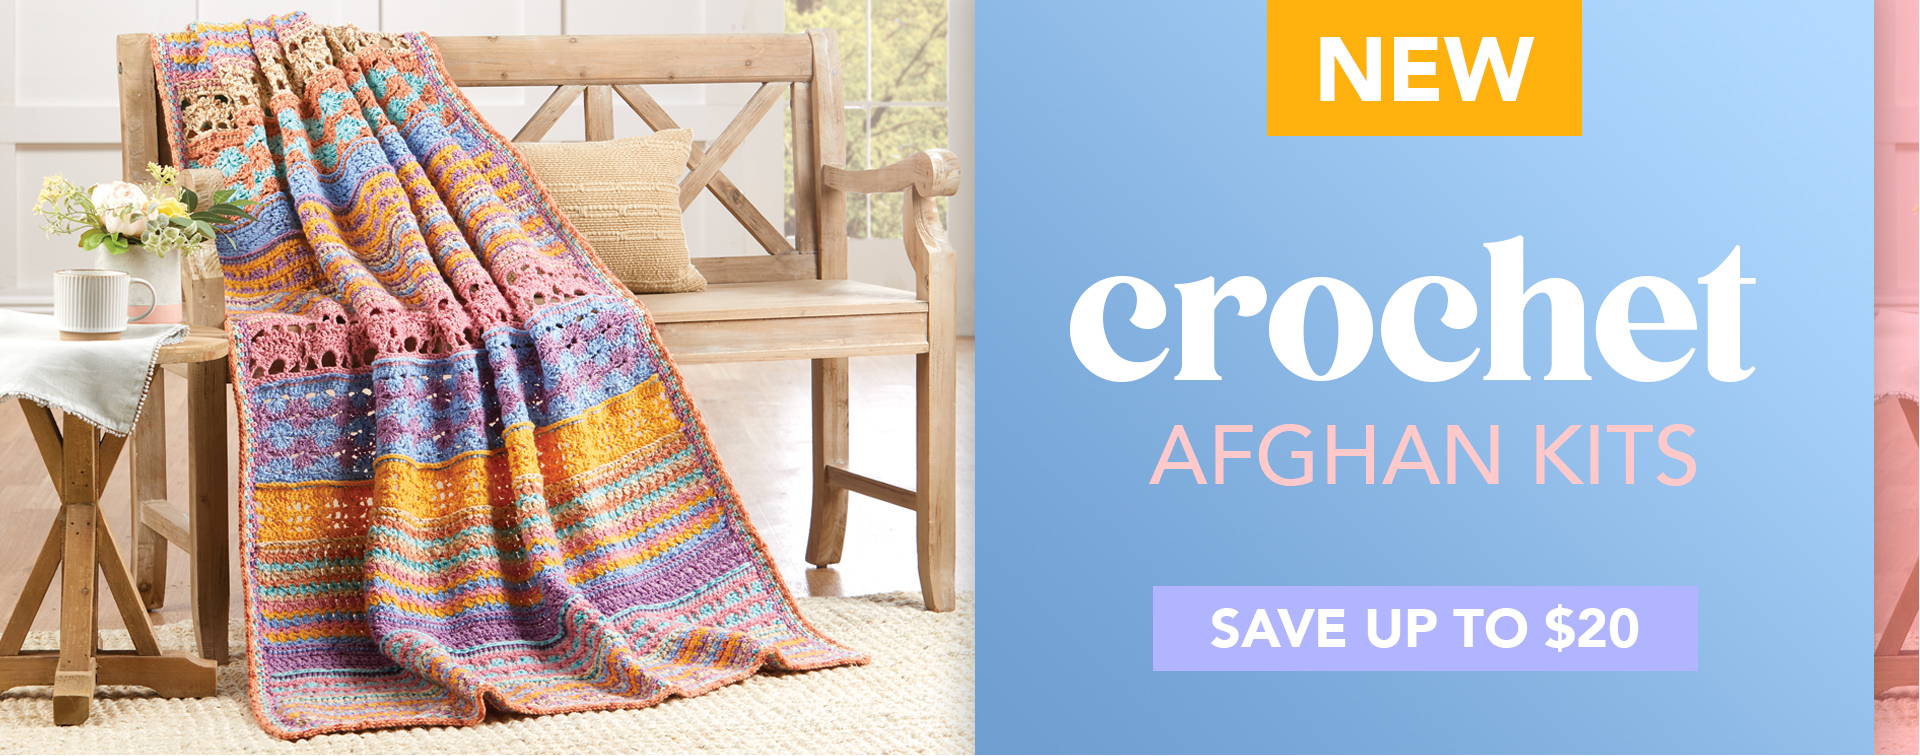 NEW Crochet Afghan Kits